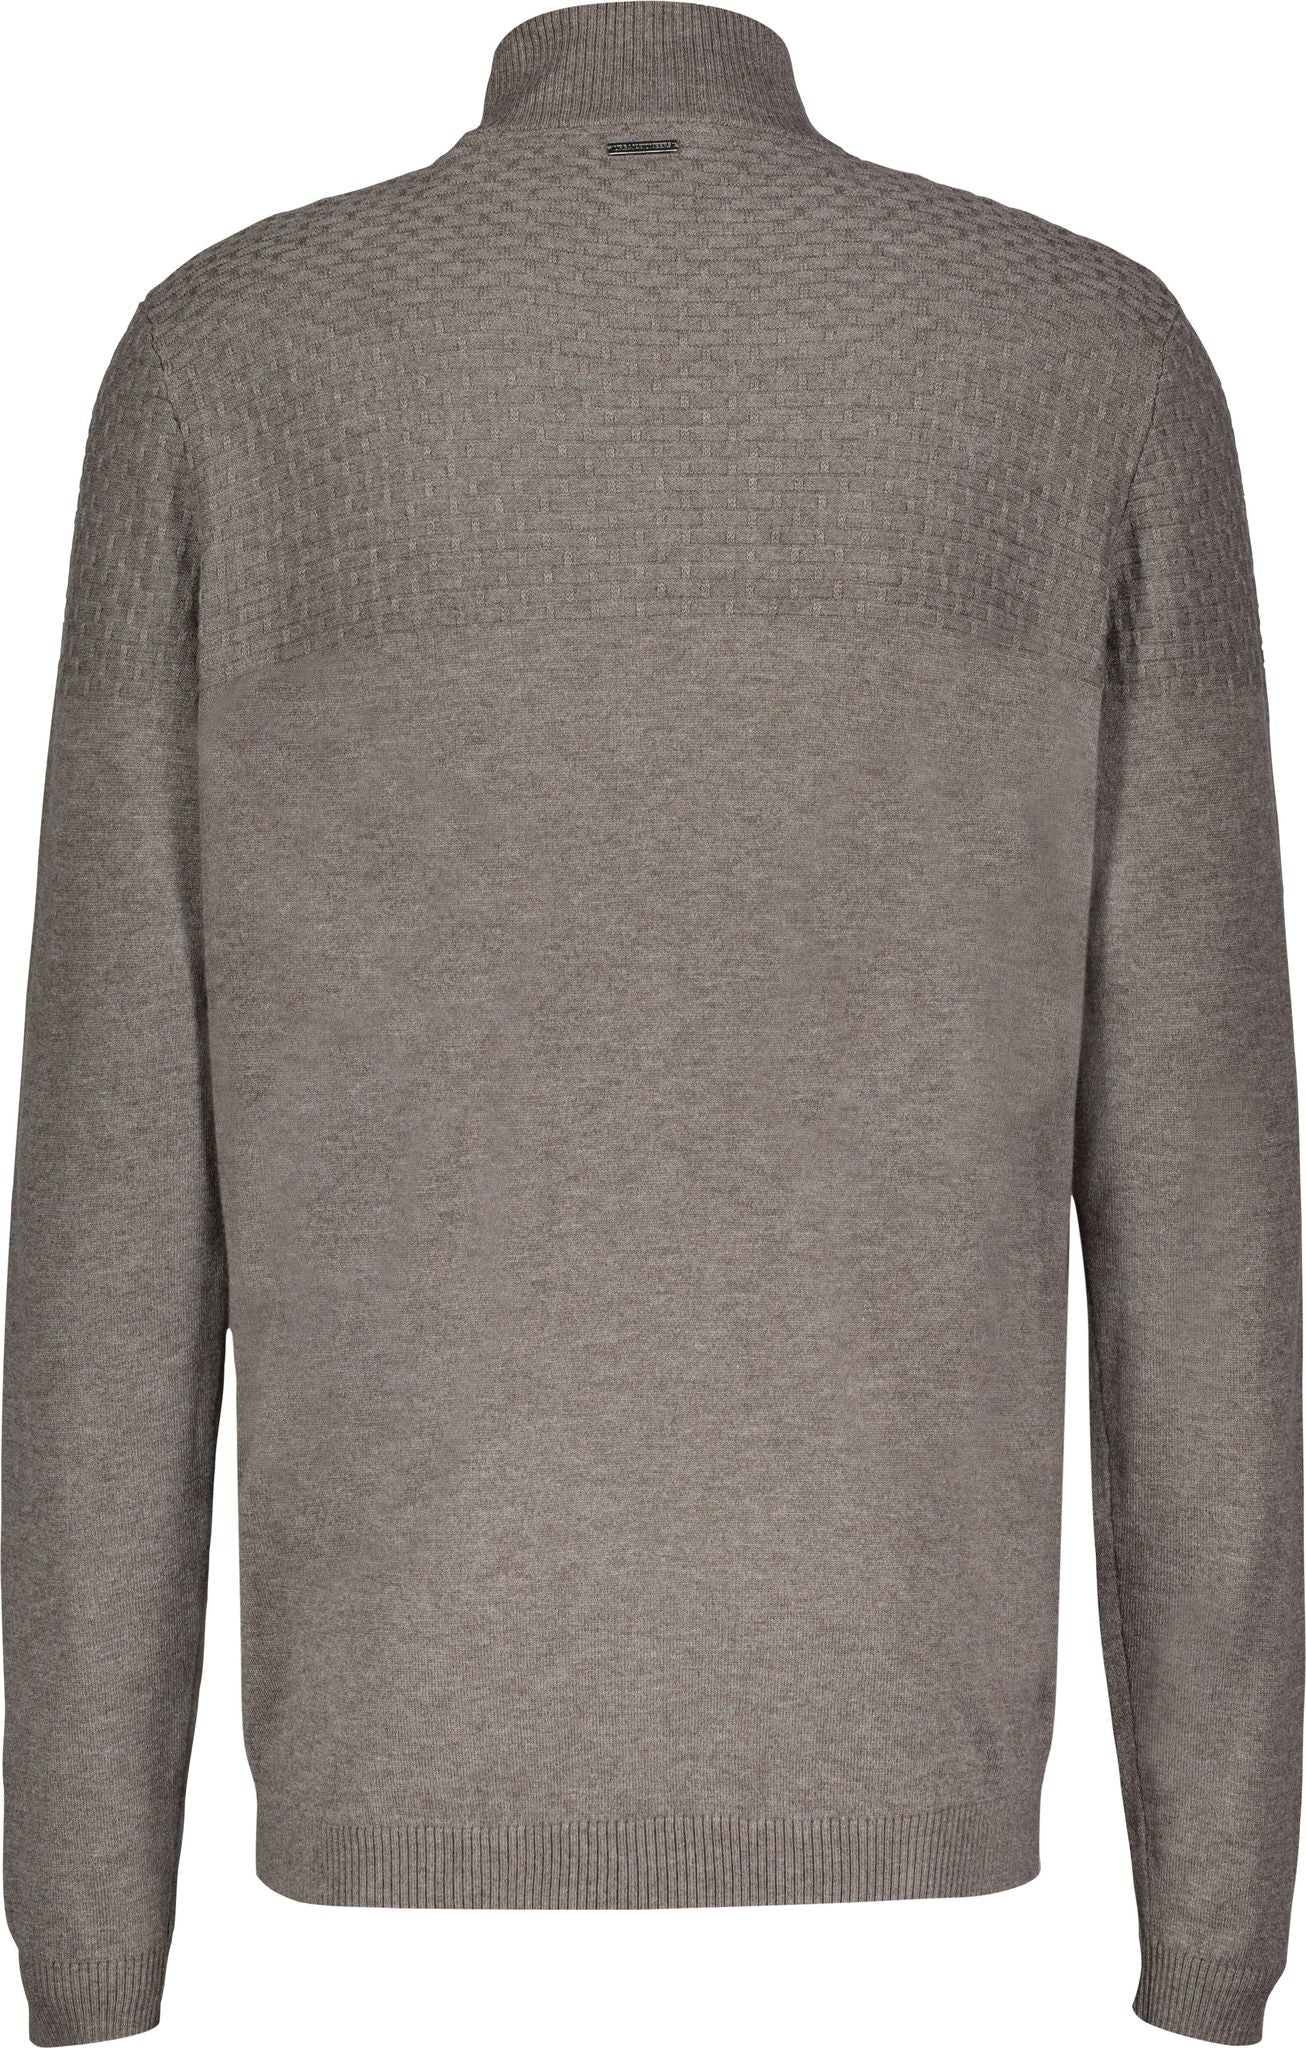 Halvsten Sweater - Mid Brown Melange